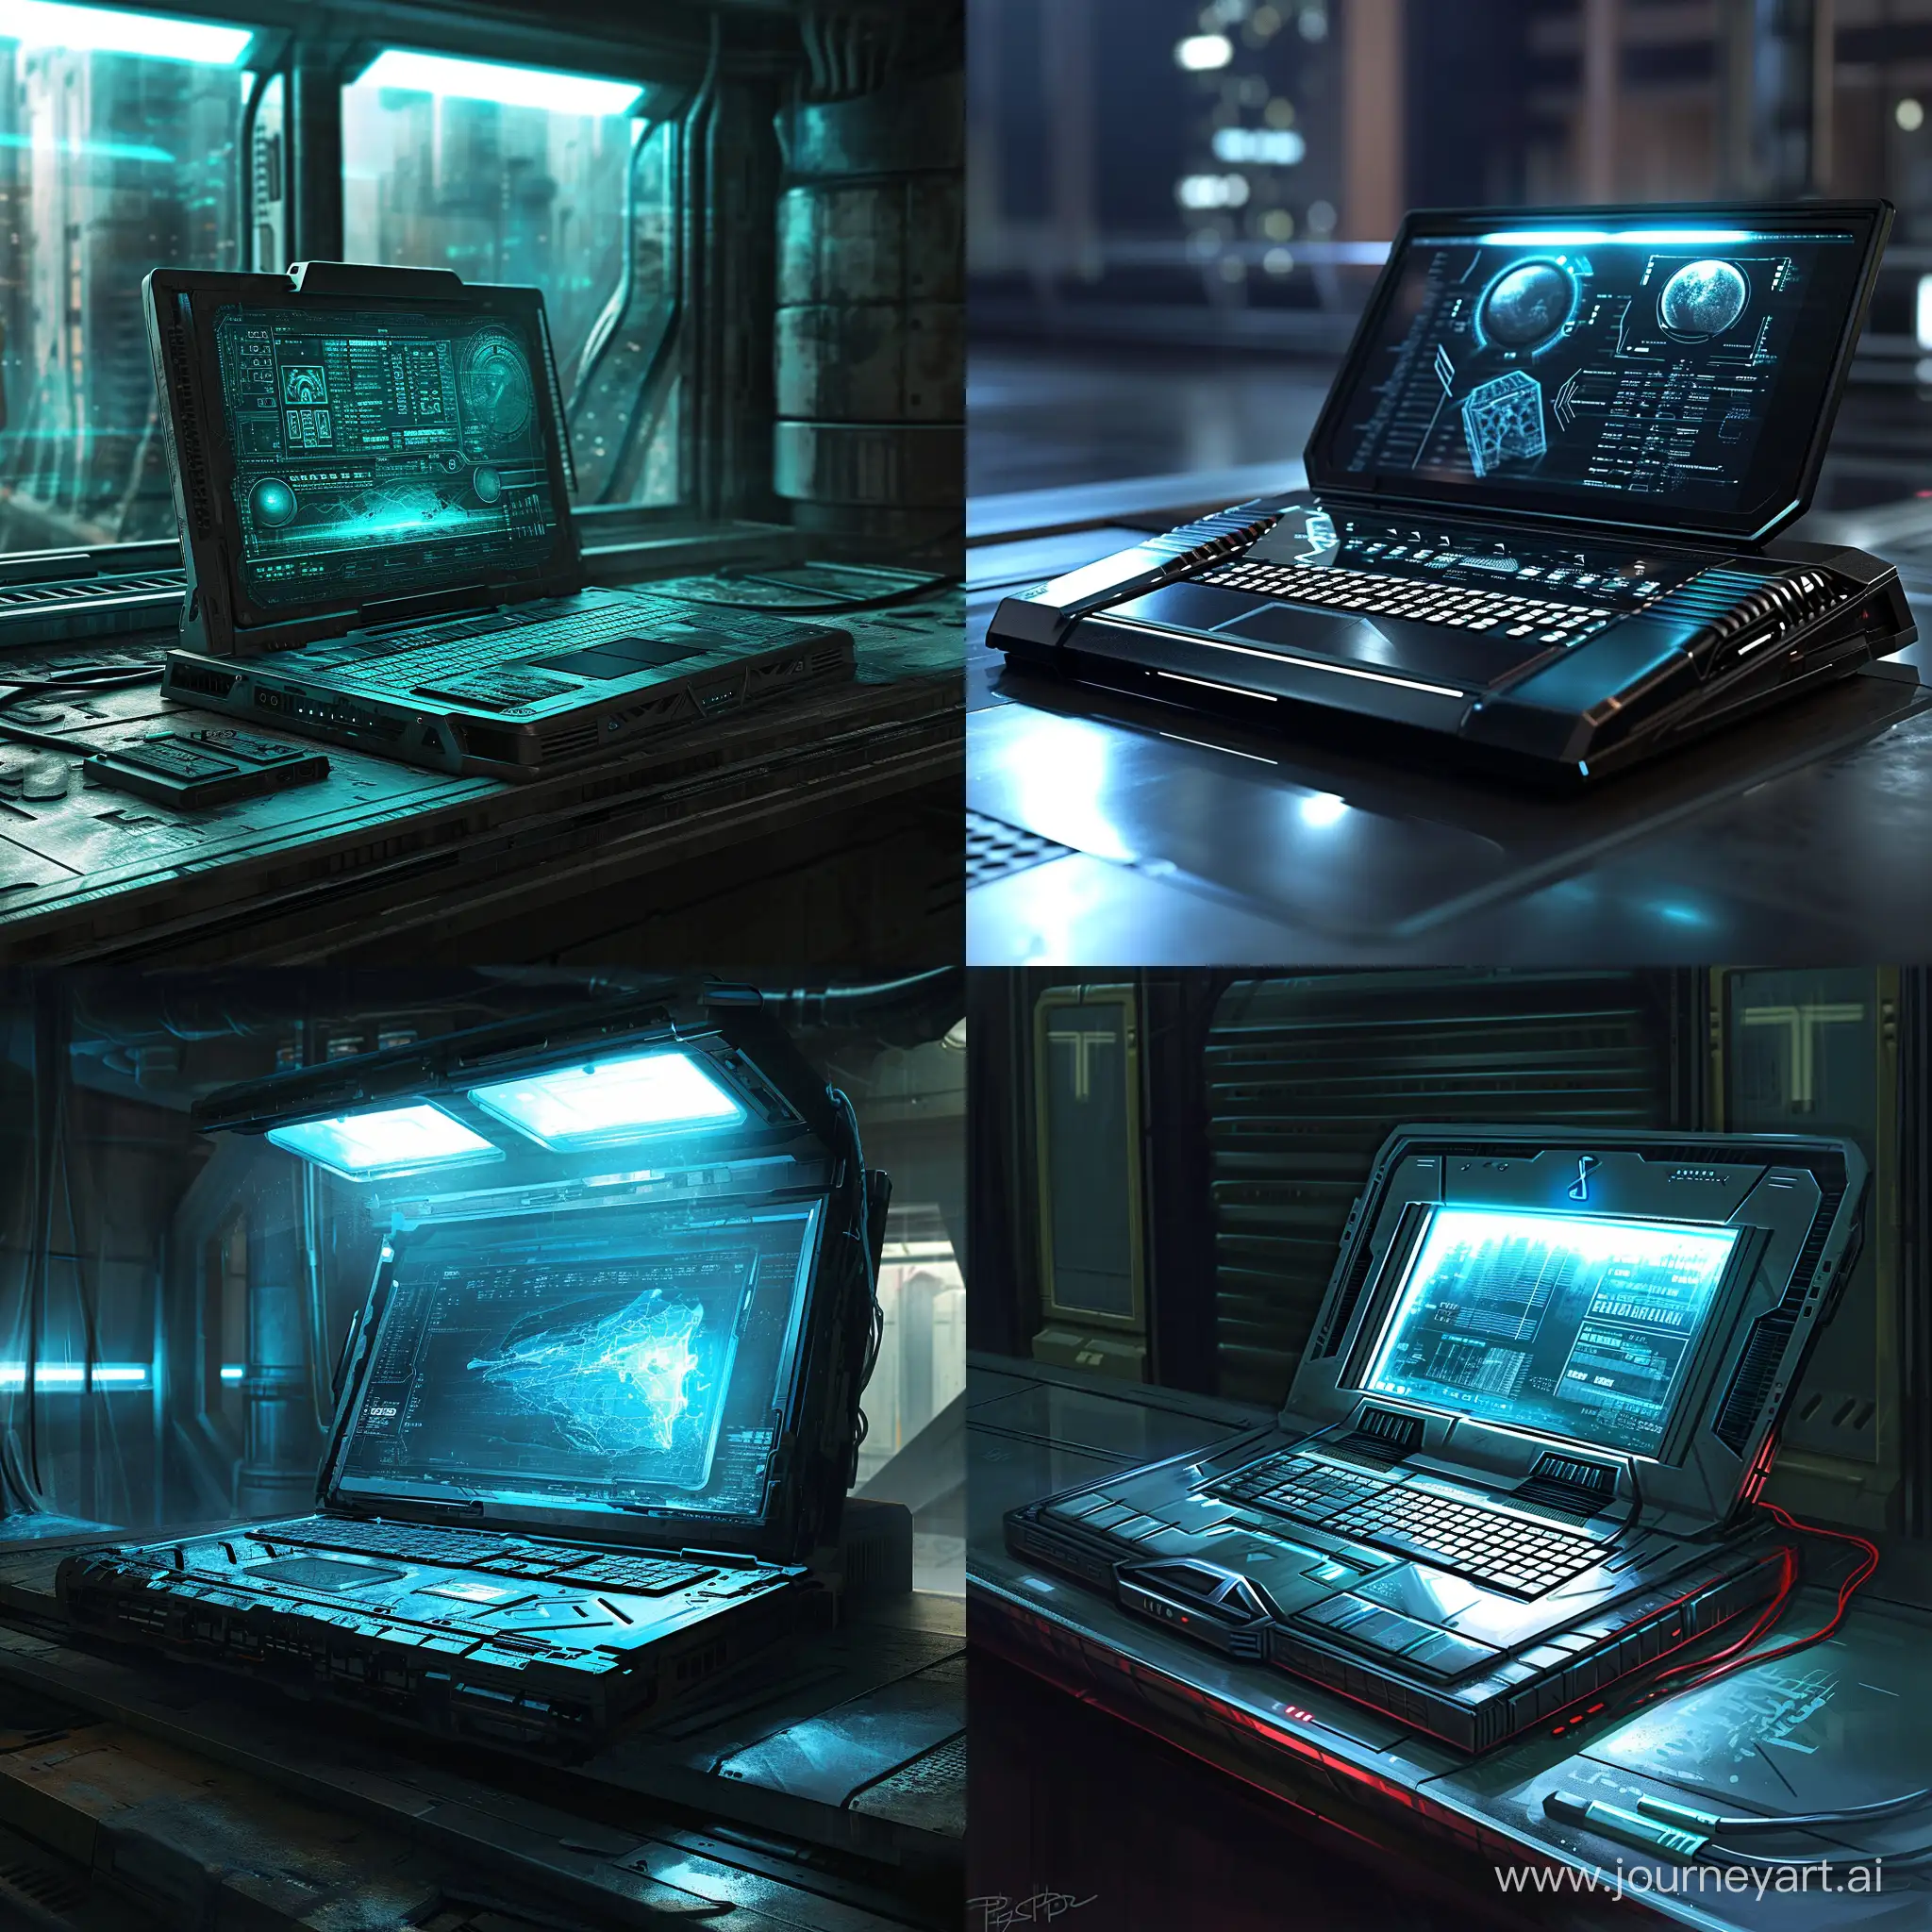 Futuristic-Laptop-Concept-Art-SciFi-Innovation-in-Digital-Technology